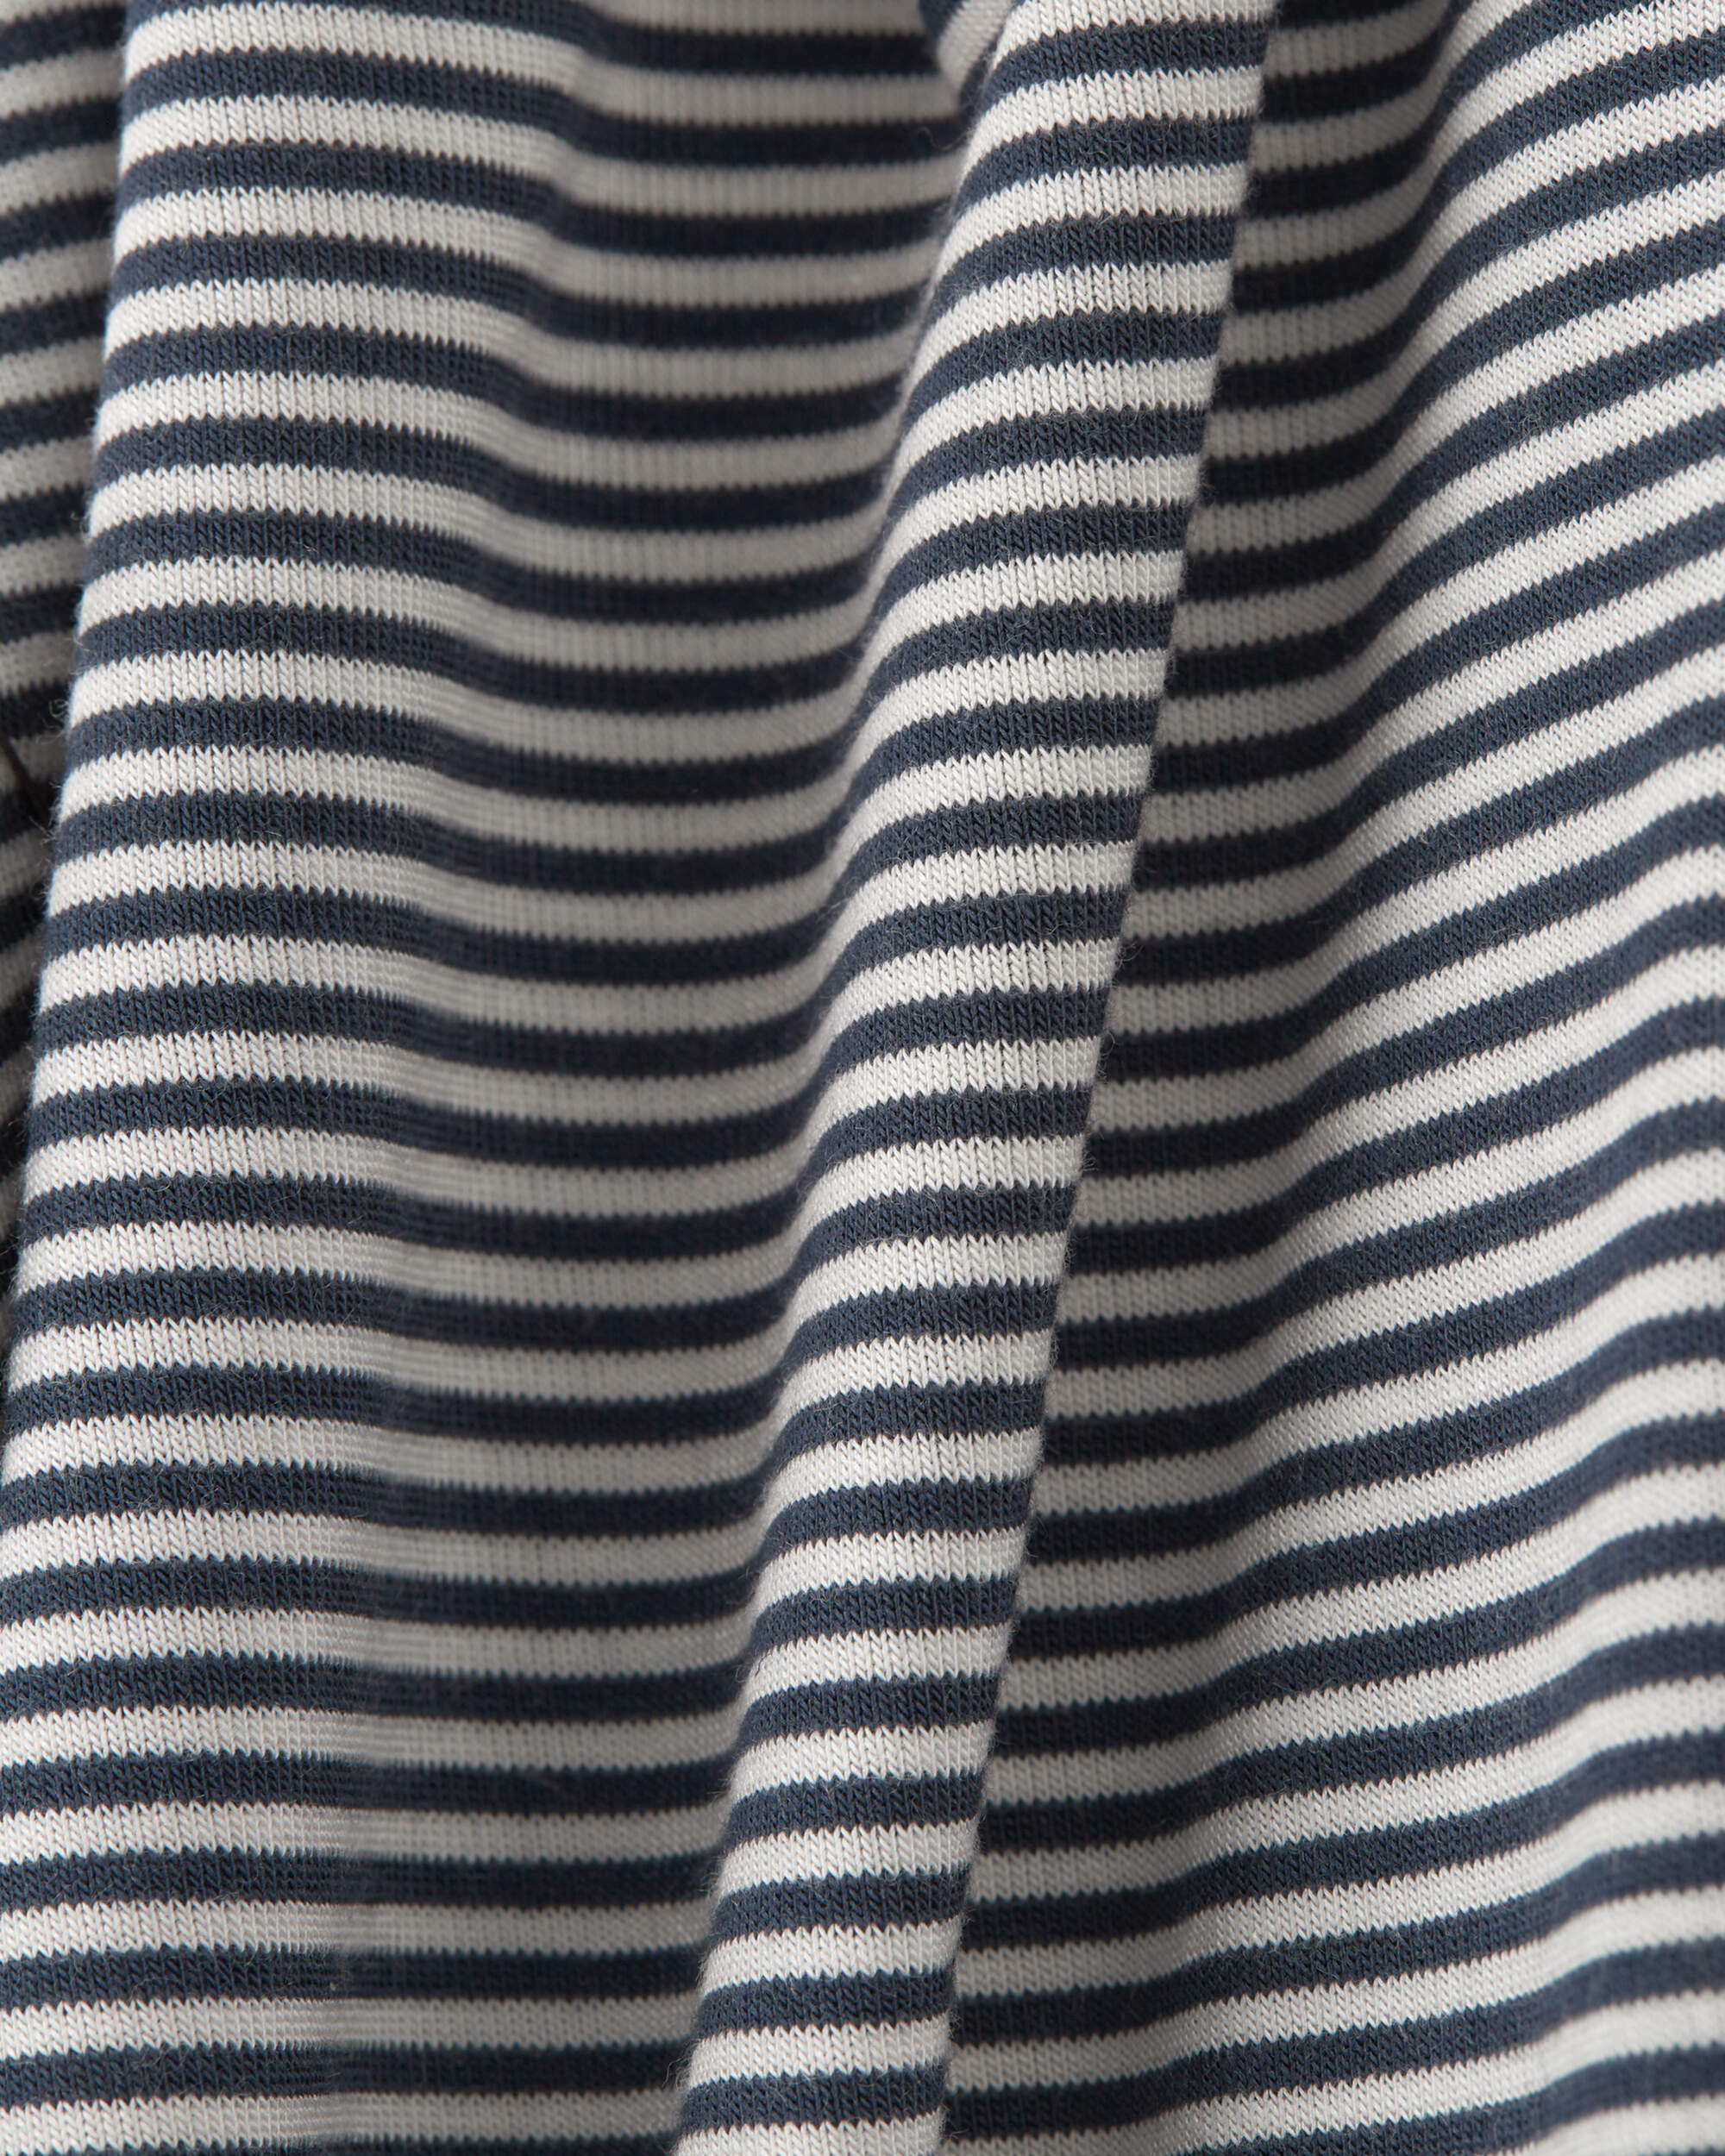 Toddler 2-Piece Striped PurelySoft Pyjamas